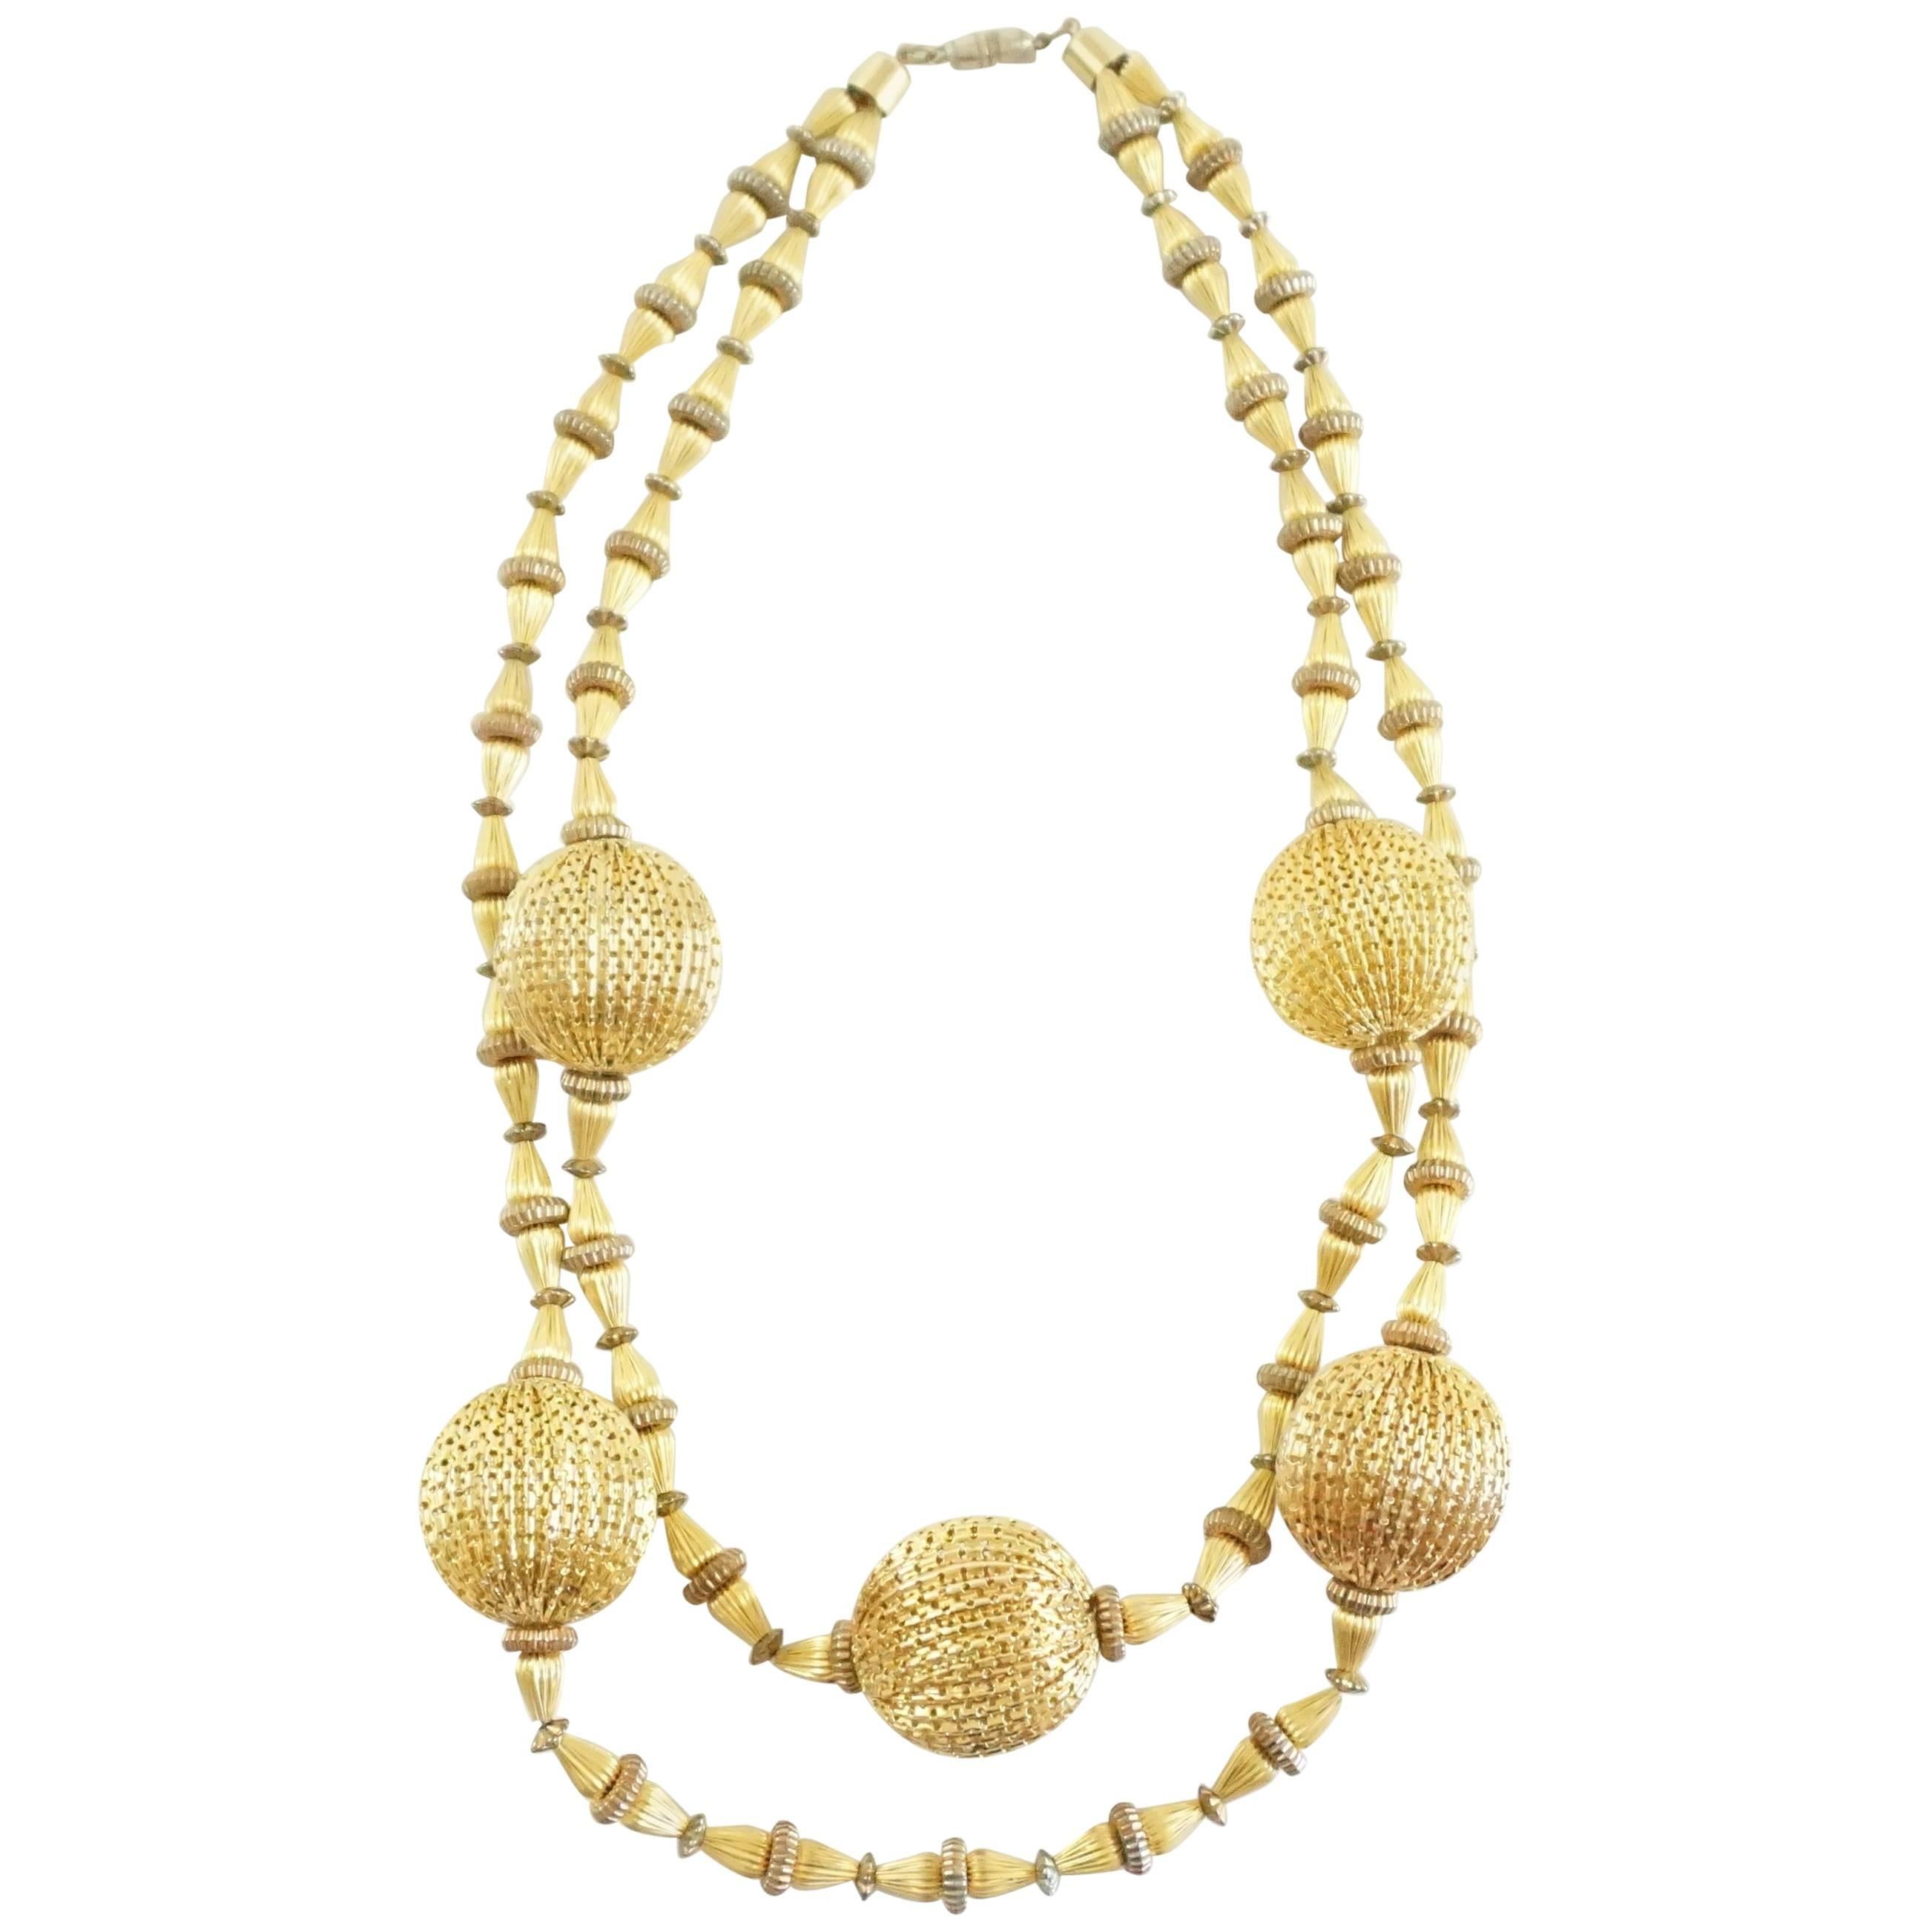 Vintage Gold Double Strand Ball Necklace - circa 1970's